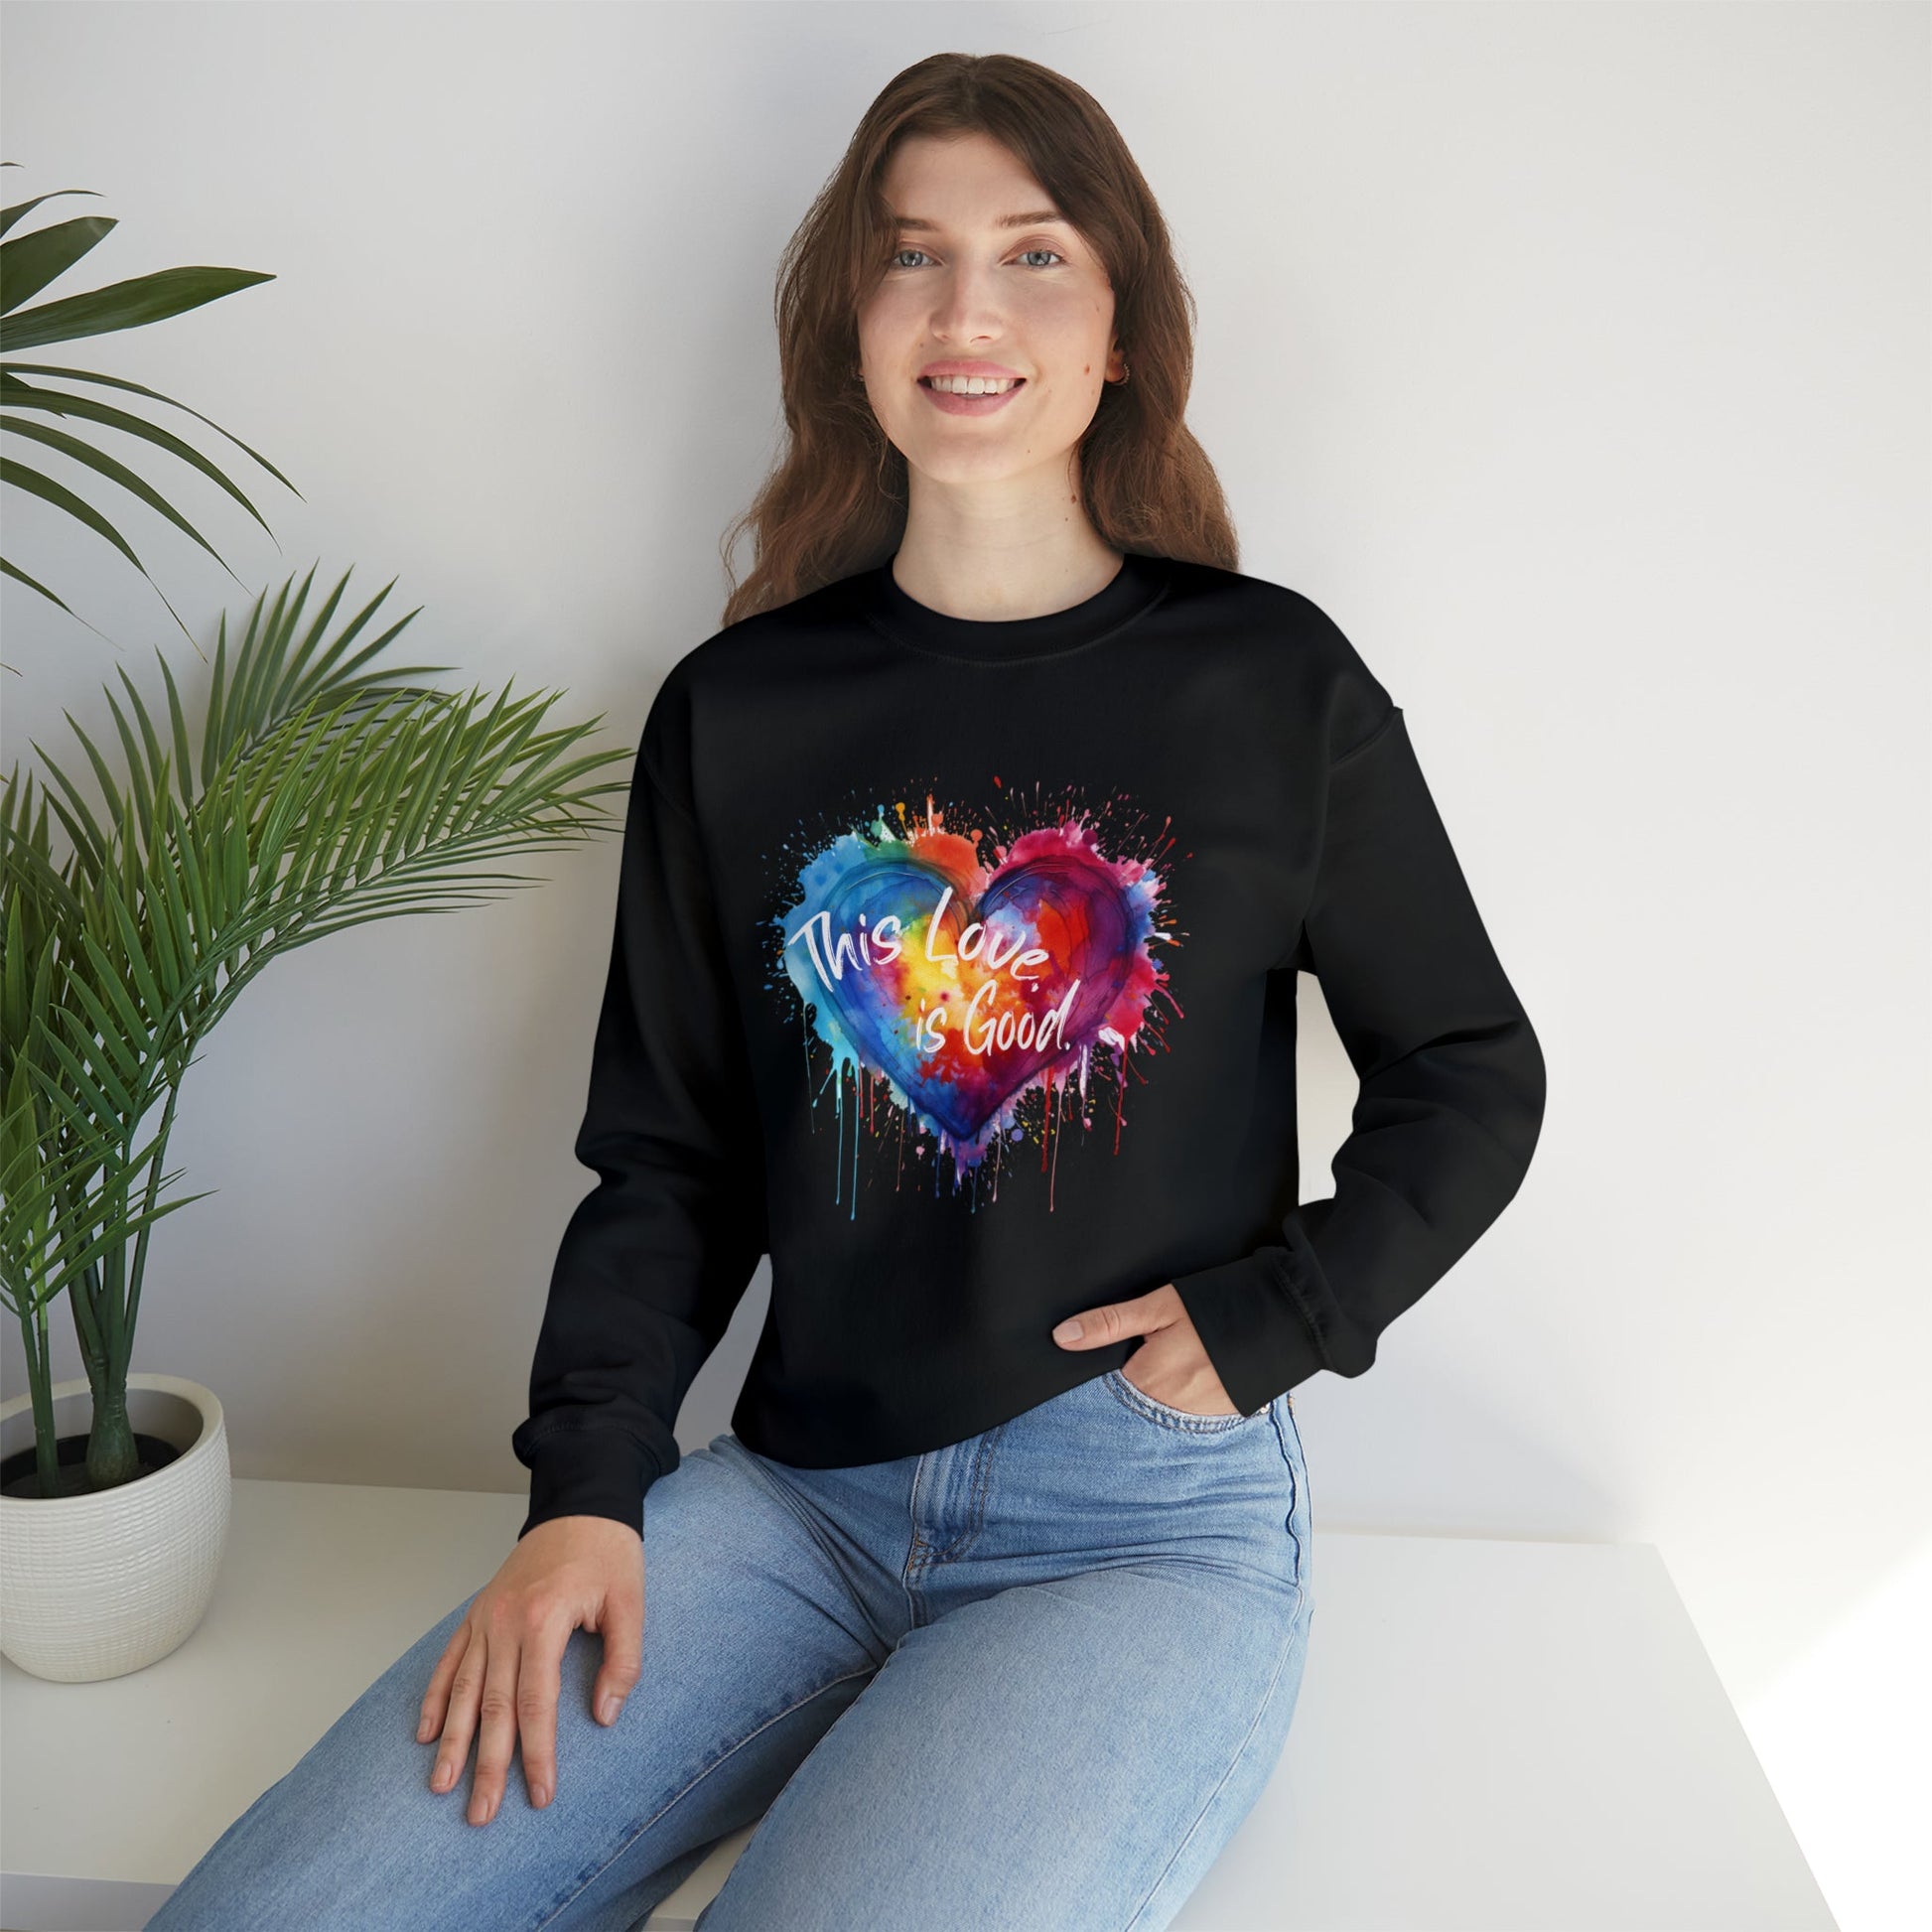 Rainbow Heart Sweatshirt: 'This Love, is Good', Wearable Watercolor Art, Gift of Love, New Love - FlooredByArt